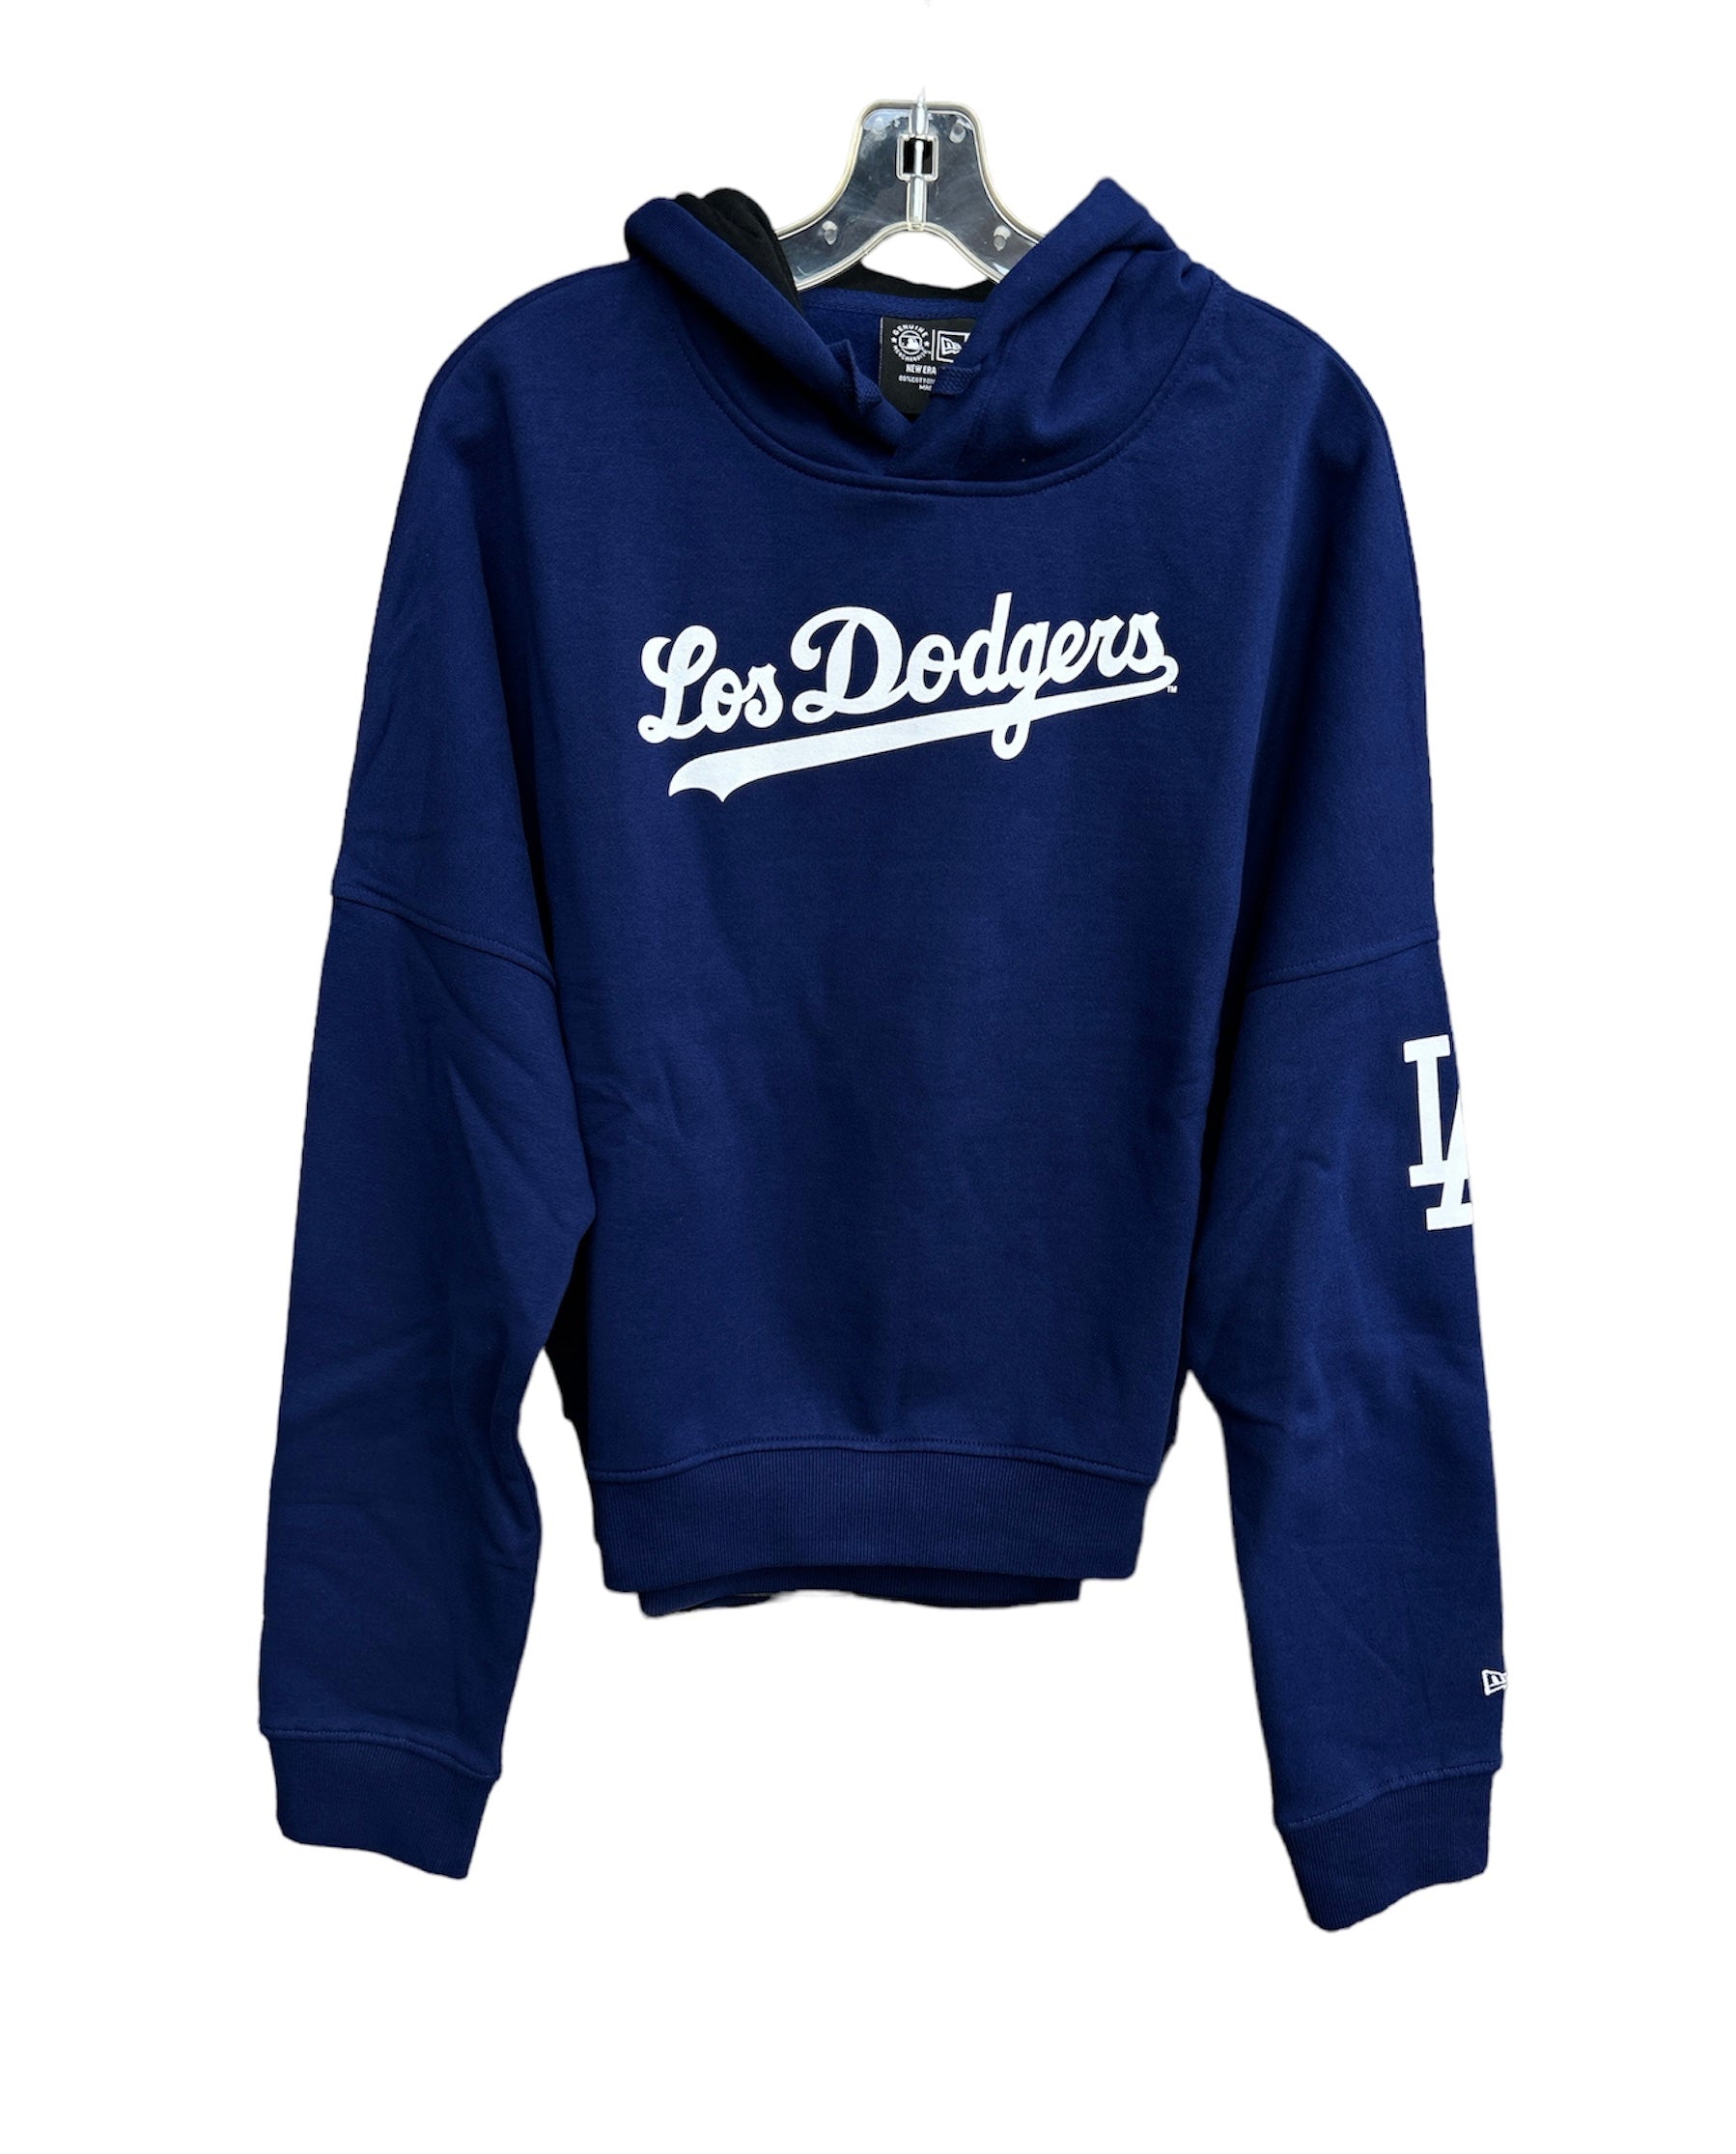 Los Angeles Dodgers Store - Pro Image America